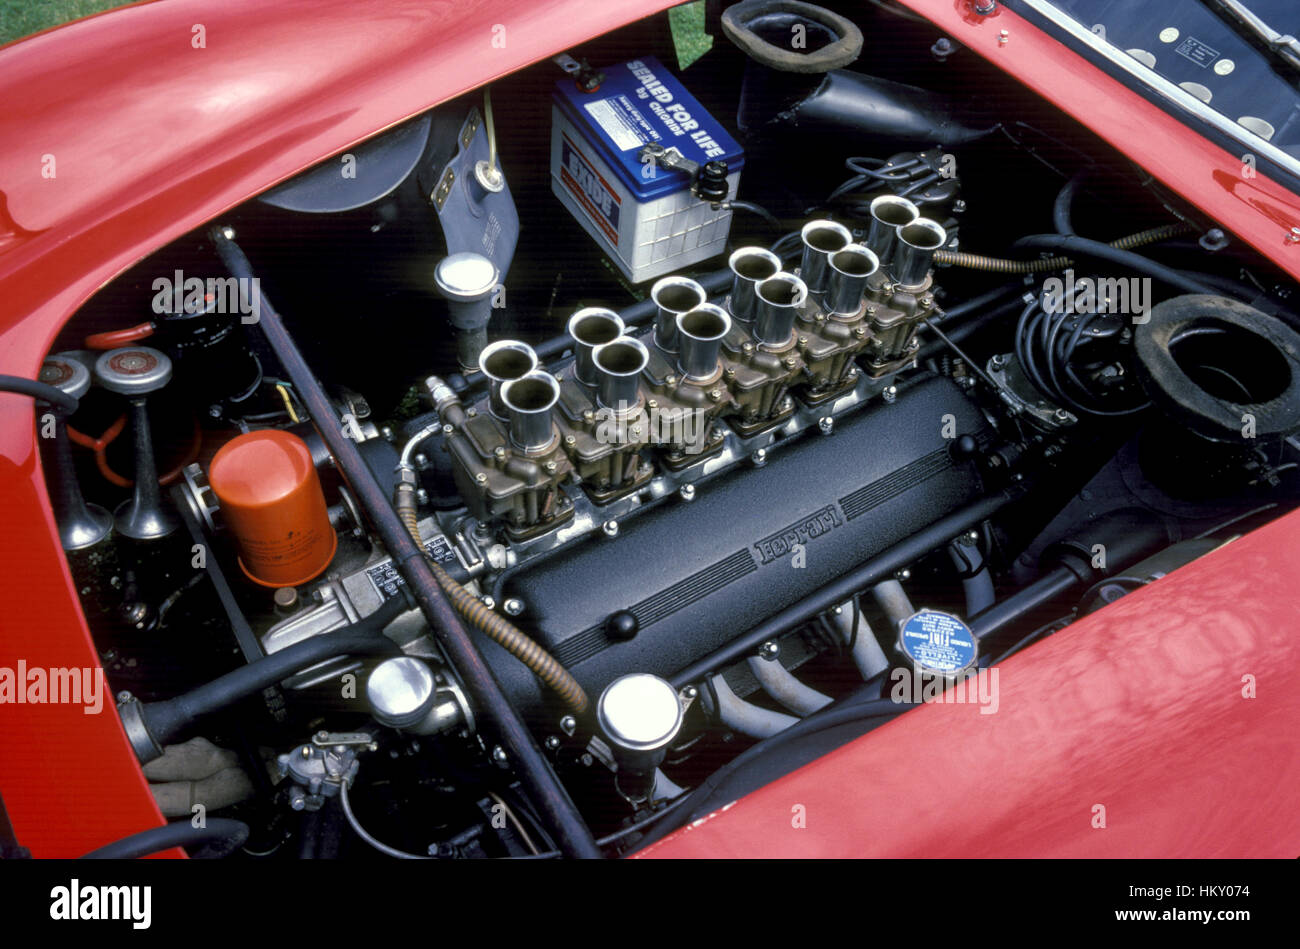 1962 Ferrari 250GTO 4115GT Motor GG Stock Photo